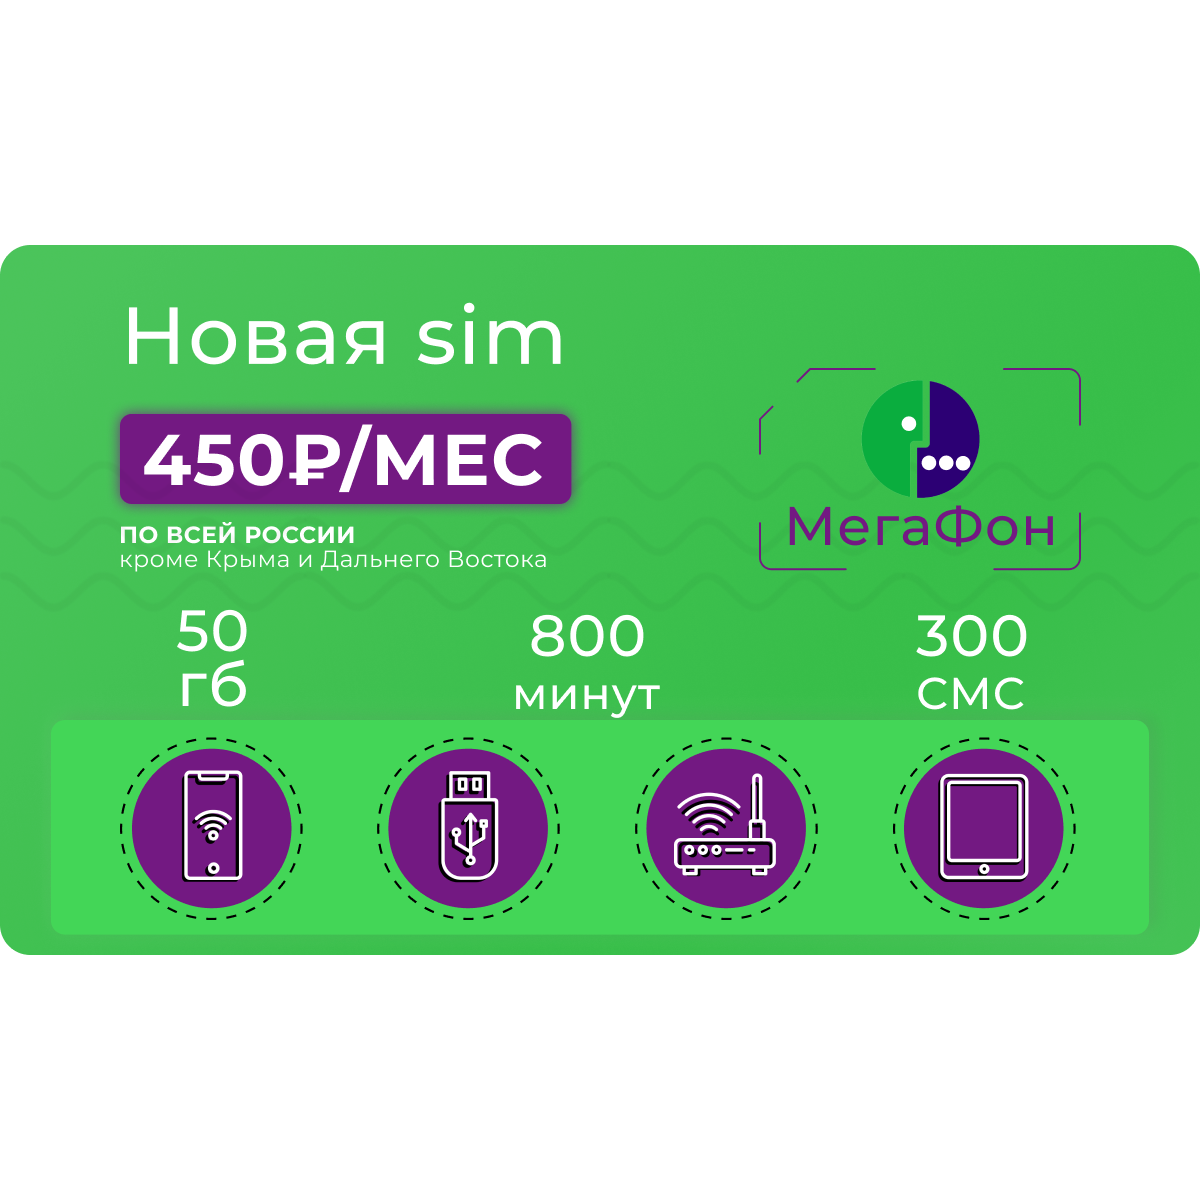 Сим-карта для звонков Мегафон 800 минут, 300 SMS, 50 гб мобильного  интернета за 450 руб/мес